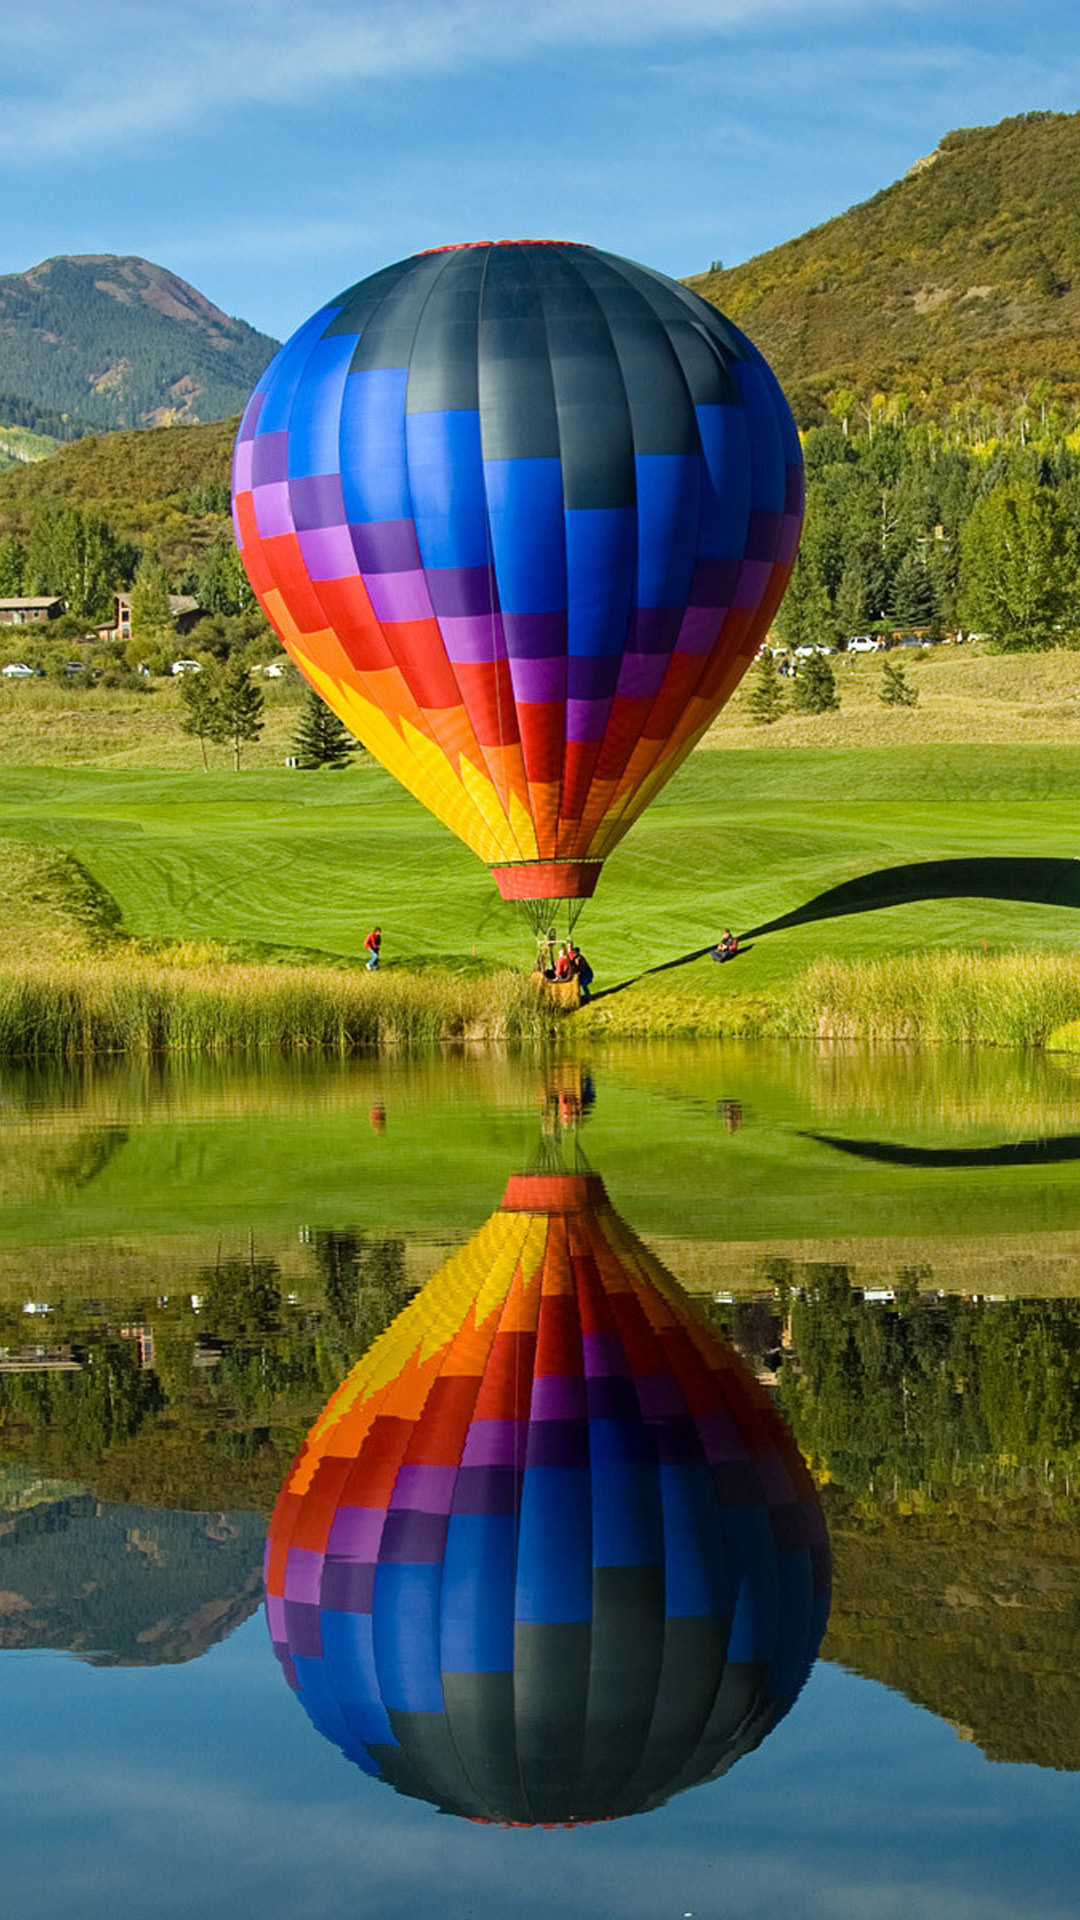 Hot Air Balloon Sightseeing iphone 6 plus wallpaper | iPhone 6 ...